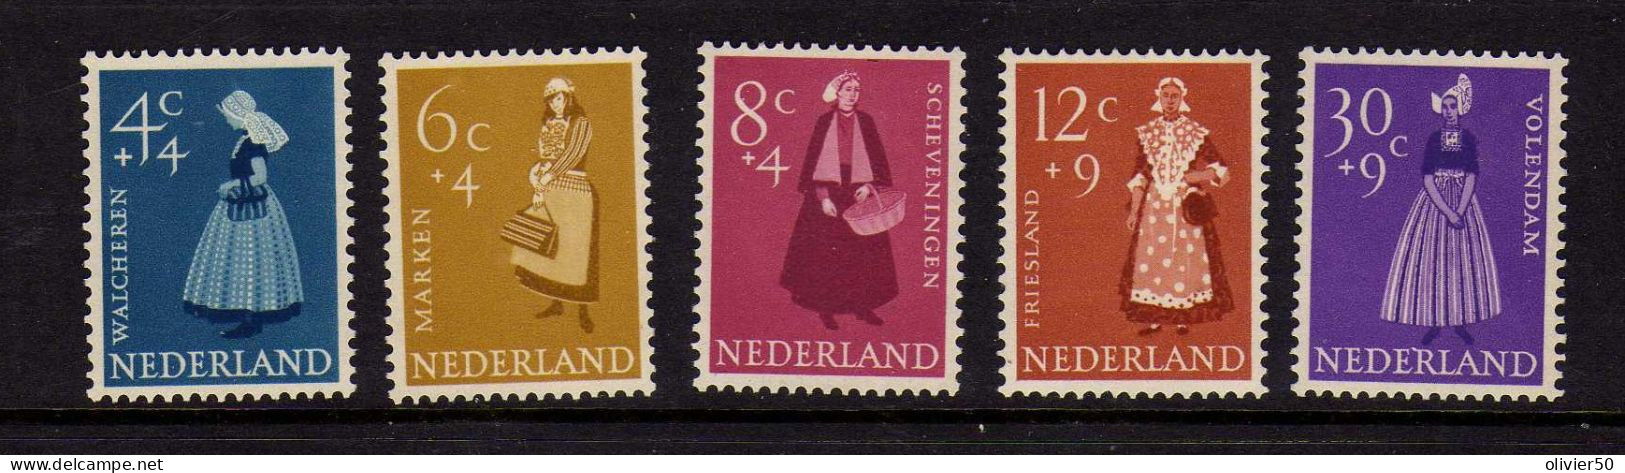 Pays-Bas - 1958 - Costumes - Oeuvres De Bienfaisance - Neufs** - MNH - Unused Stamps